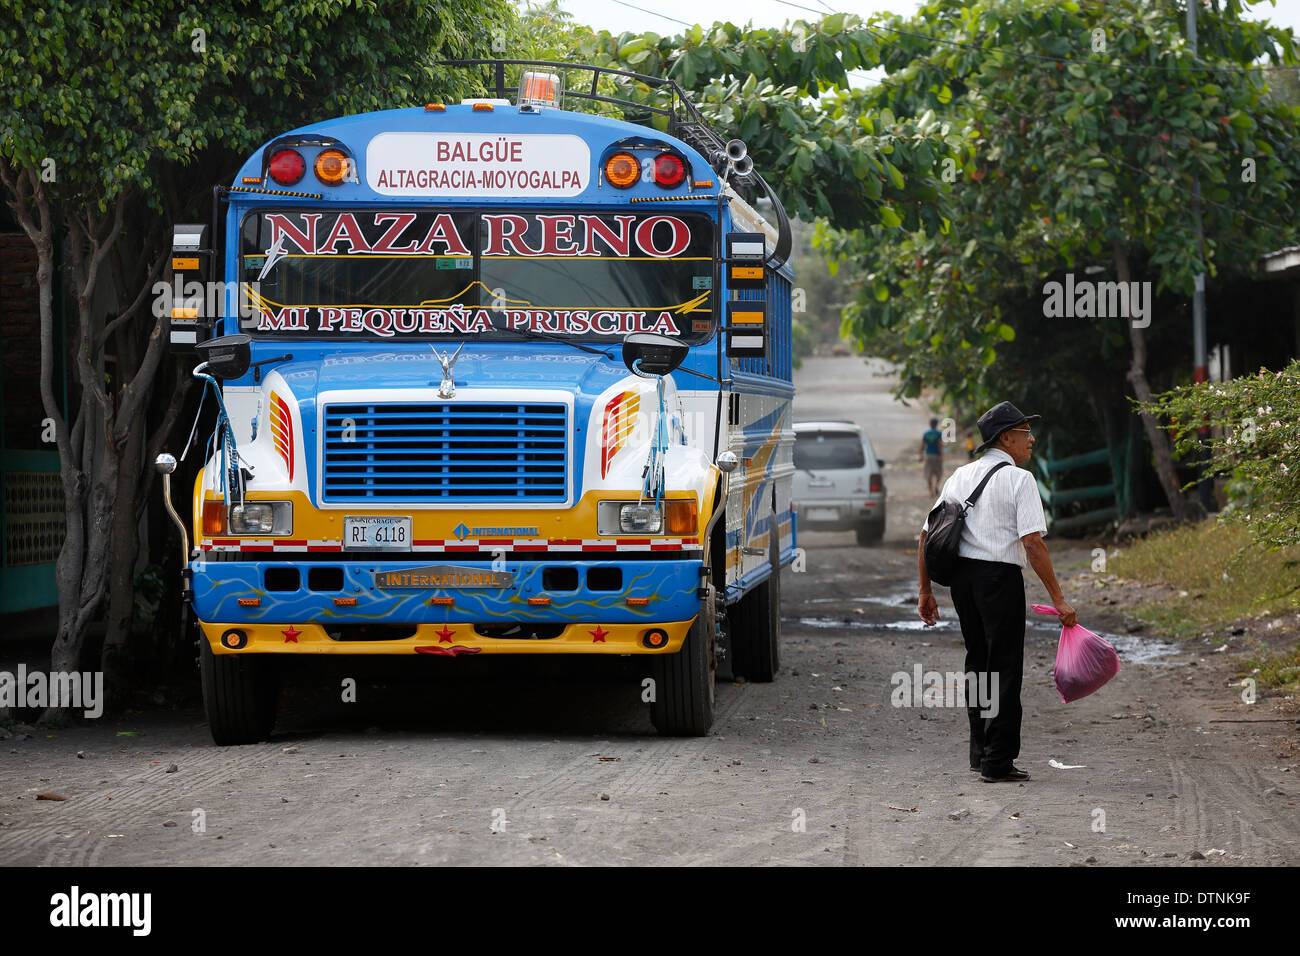 Public transport bus, Altagracia, Nicaragua Stock Photo